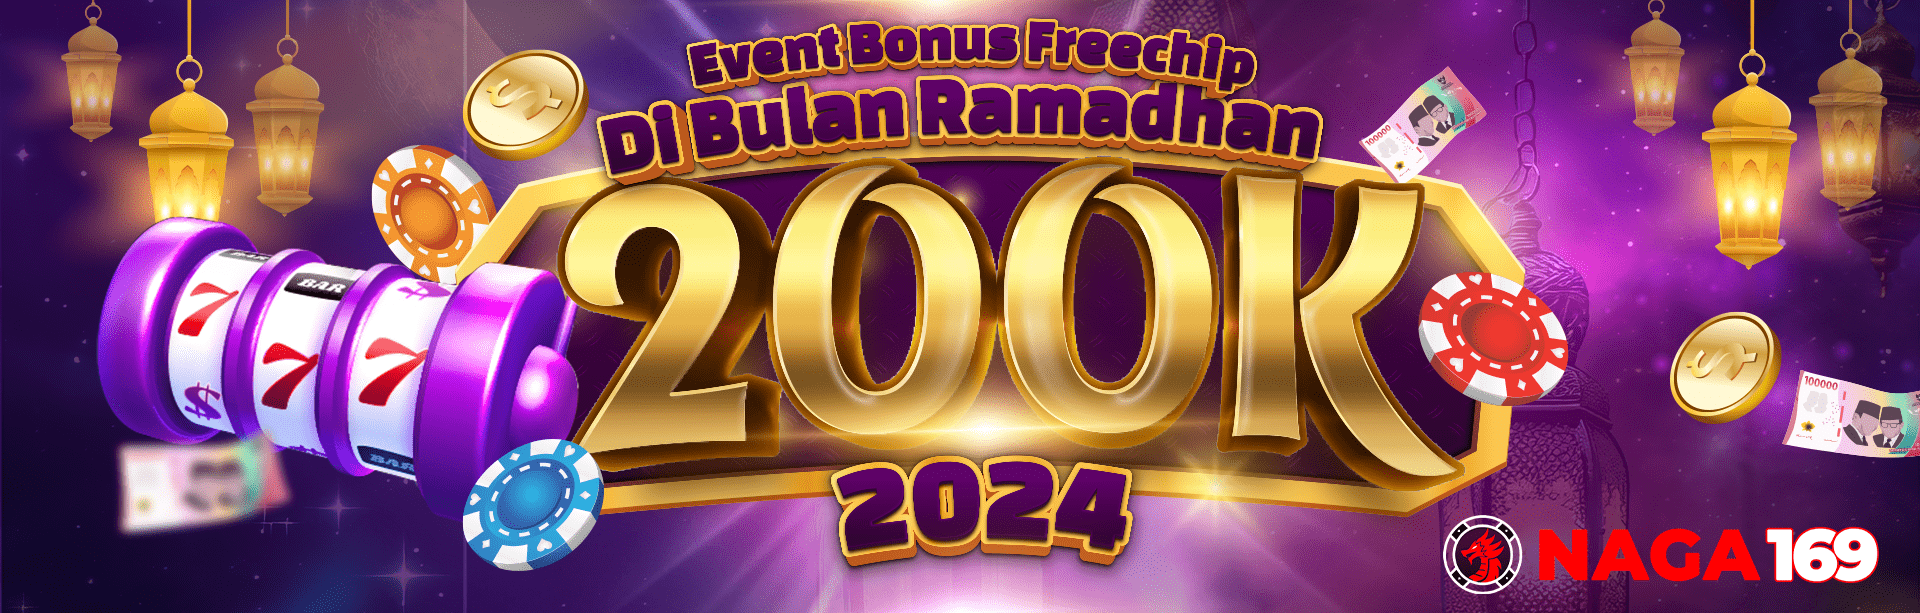 EVENT BONUS BULAN PUASA RAMADHAN FREECHIP 200K 2024 NAGA169